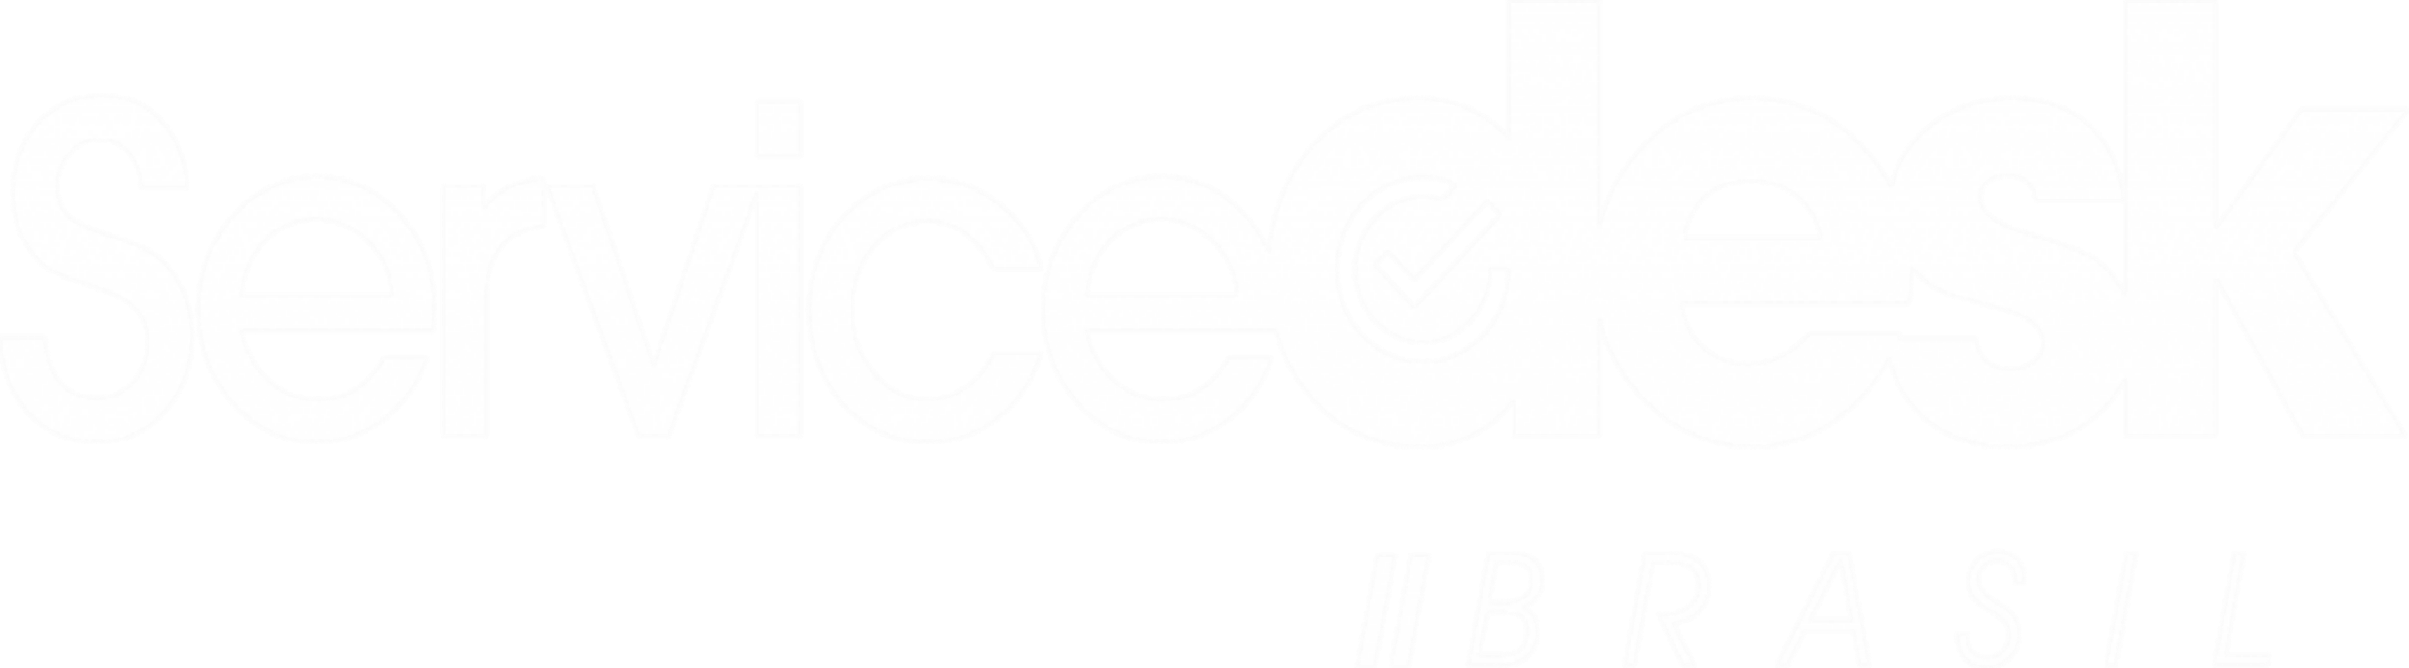 Servicedesk Brasil logo